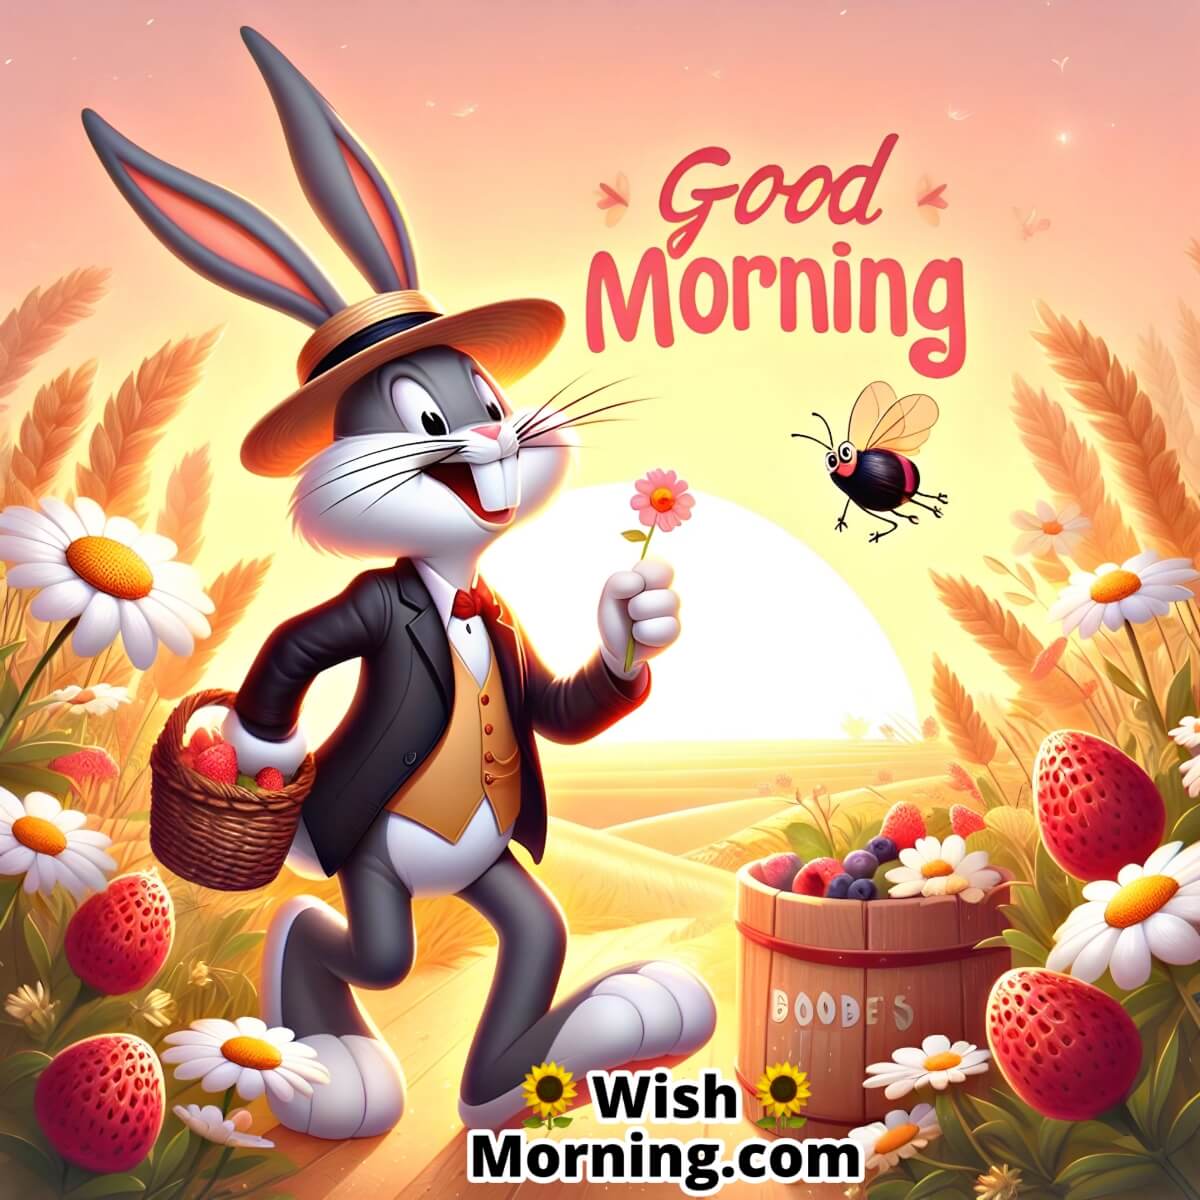 Good Morning Bugs Bunny Image